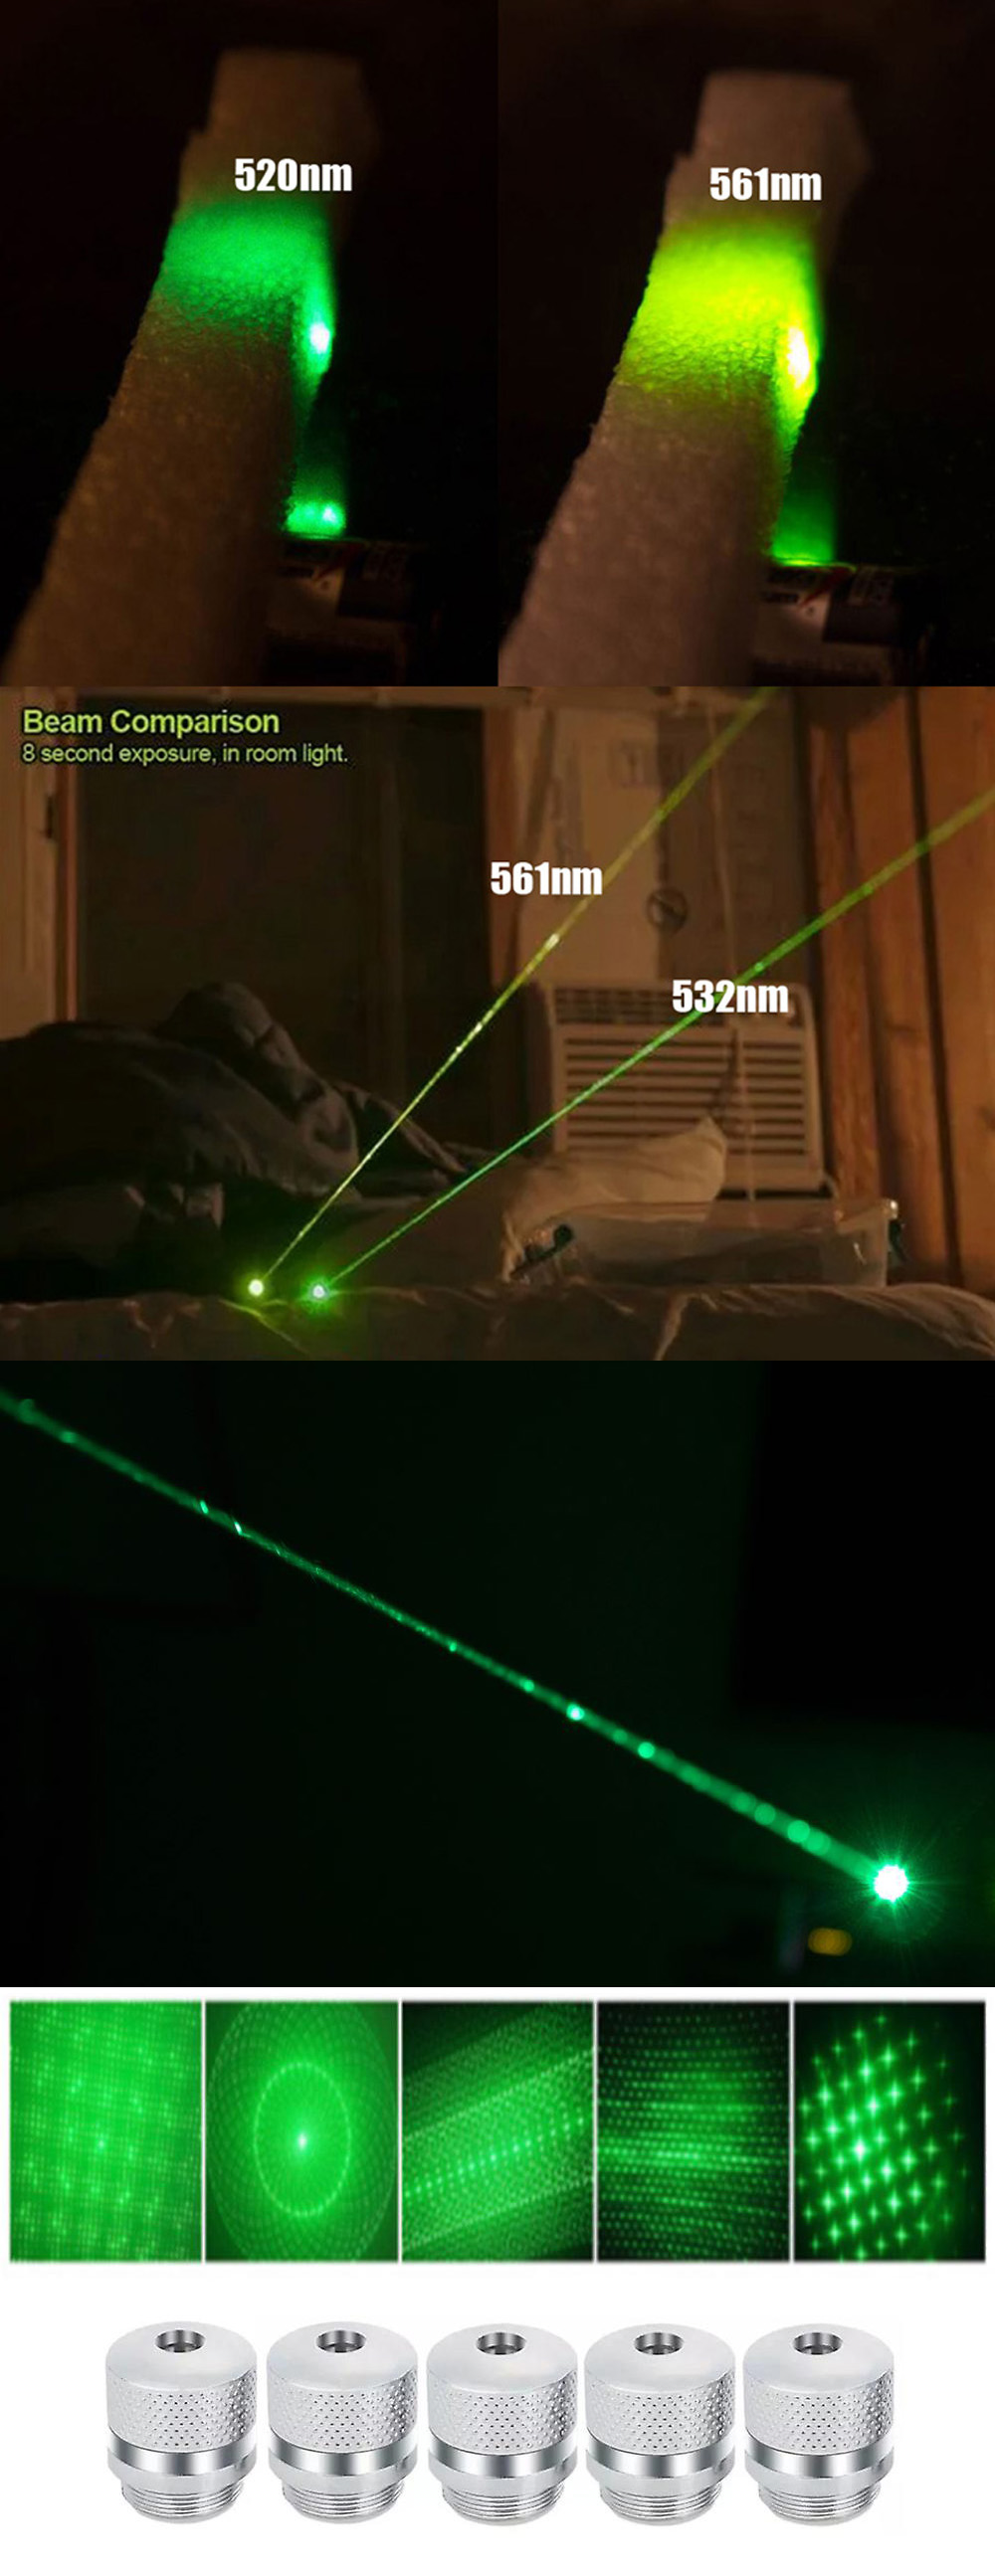 Penna laser verde con motivi